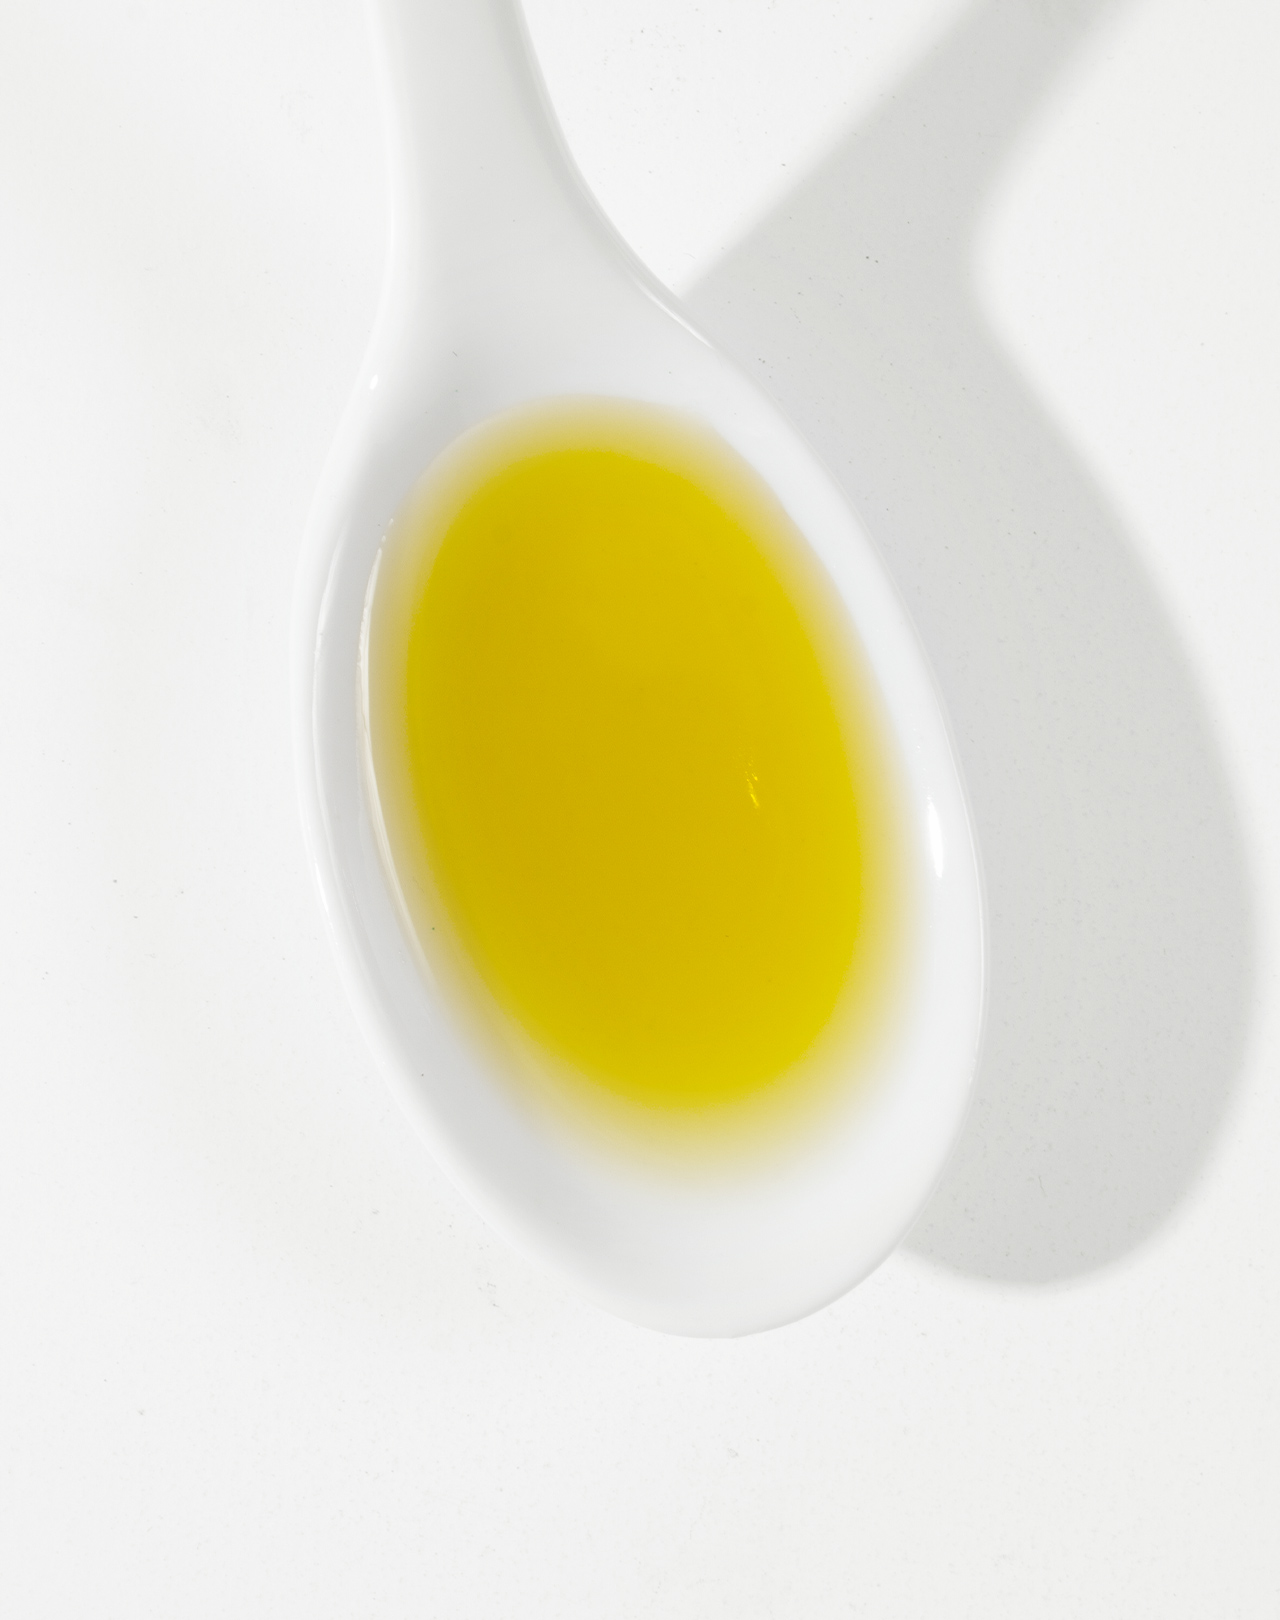 VIOLAS’ Olivenöl »Italien«